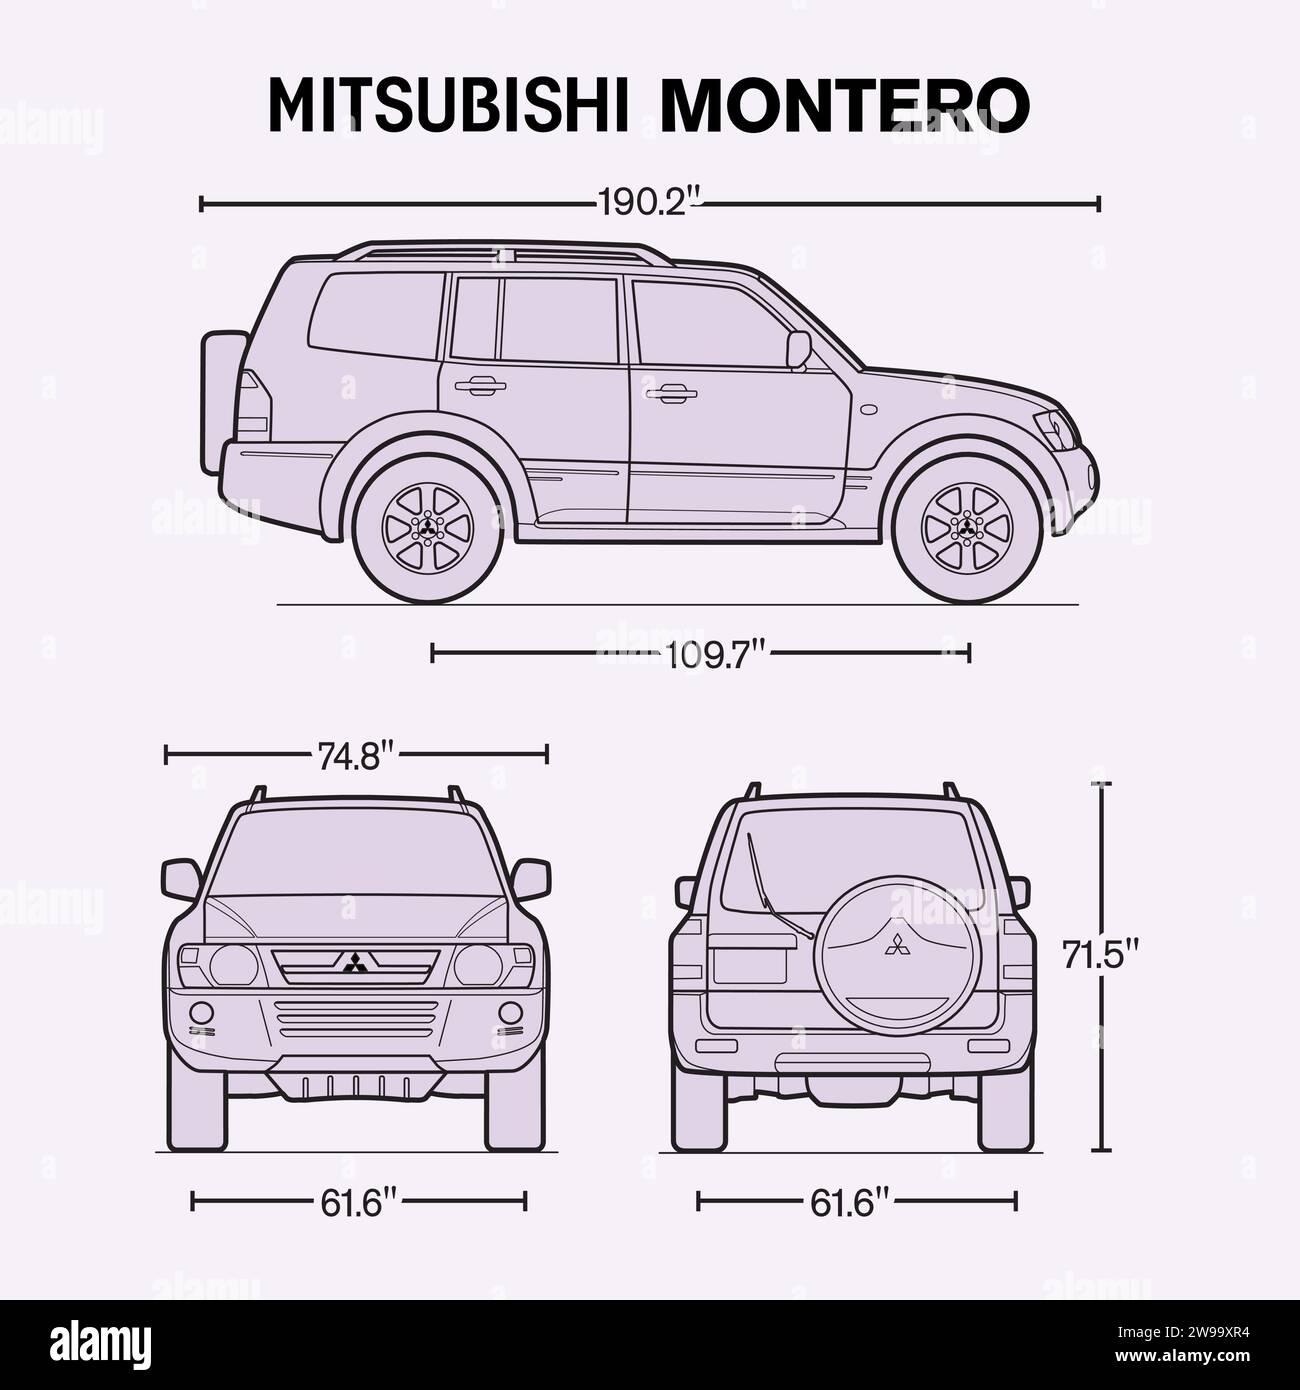 2003 Mitsubishi Montero car blueprint Stock Vector